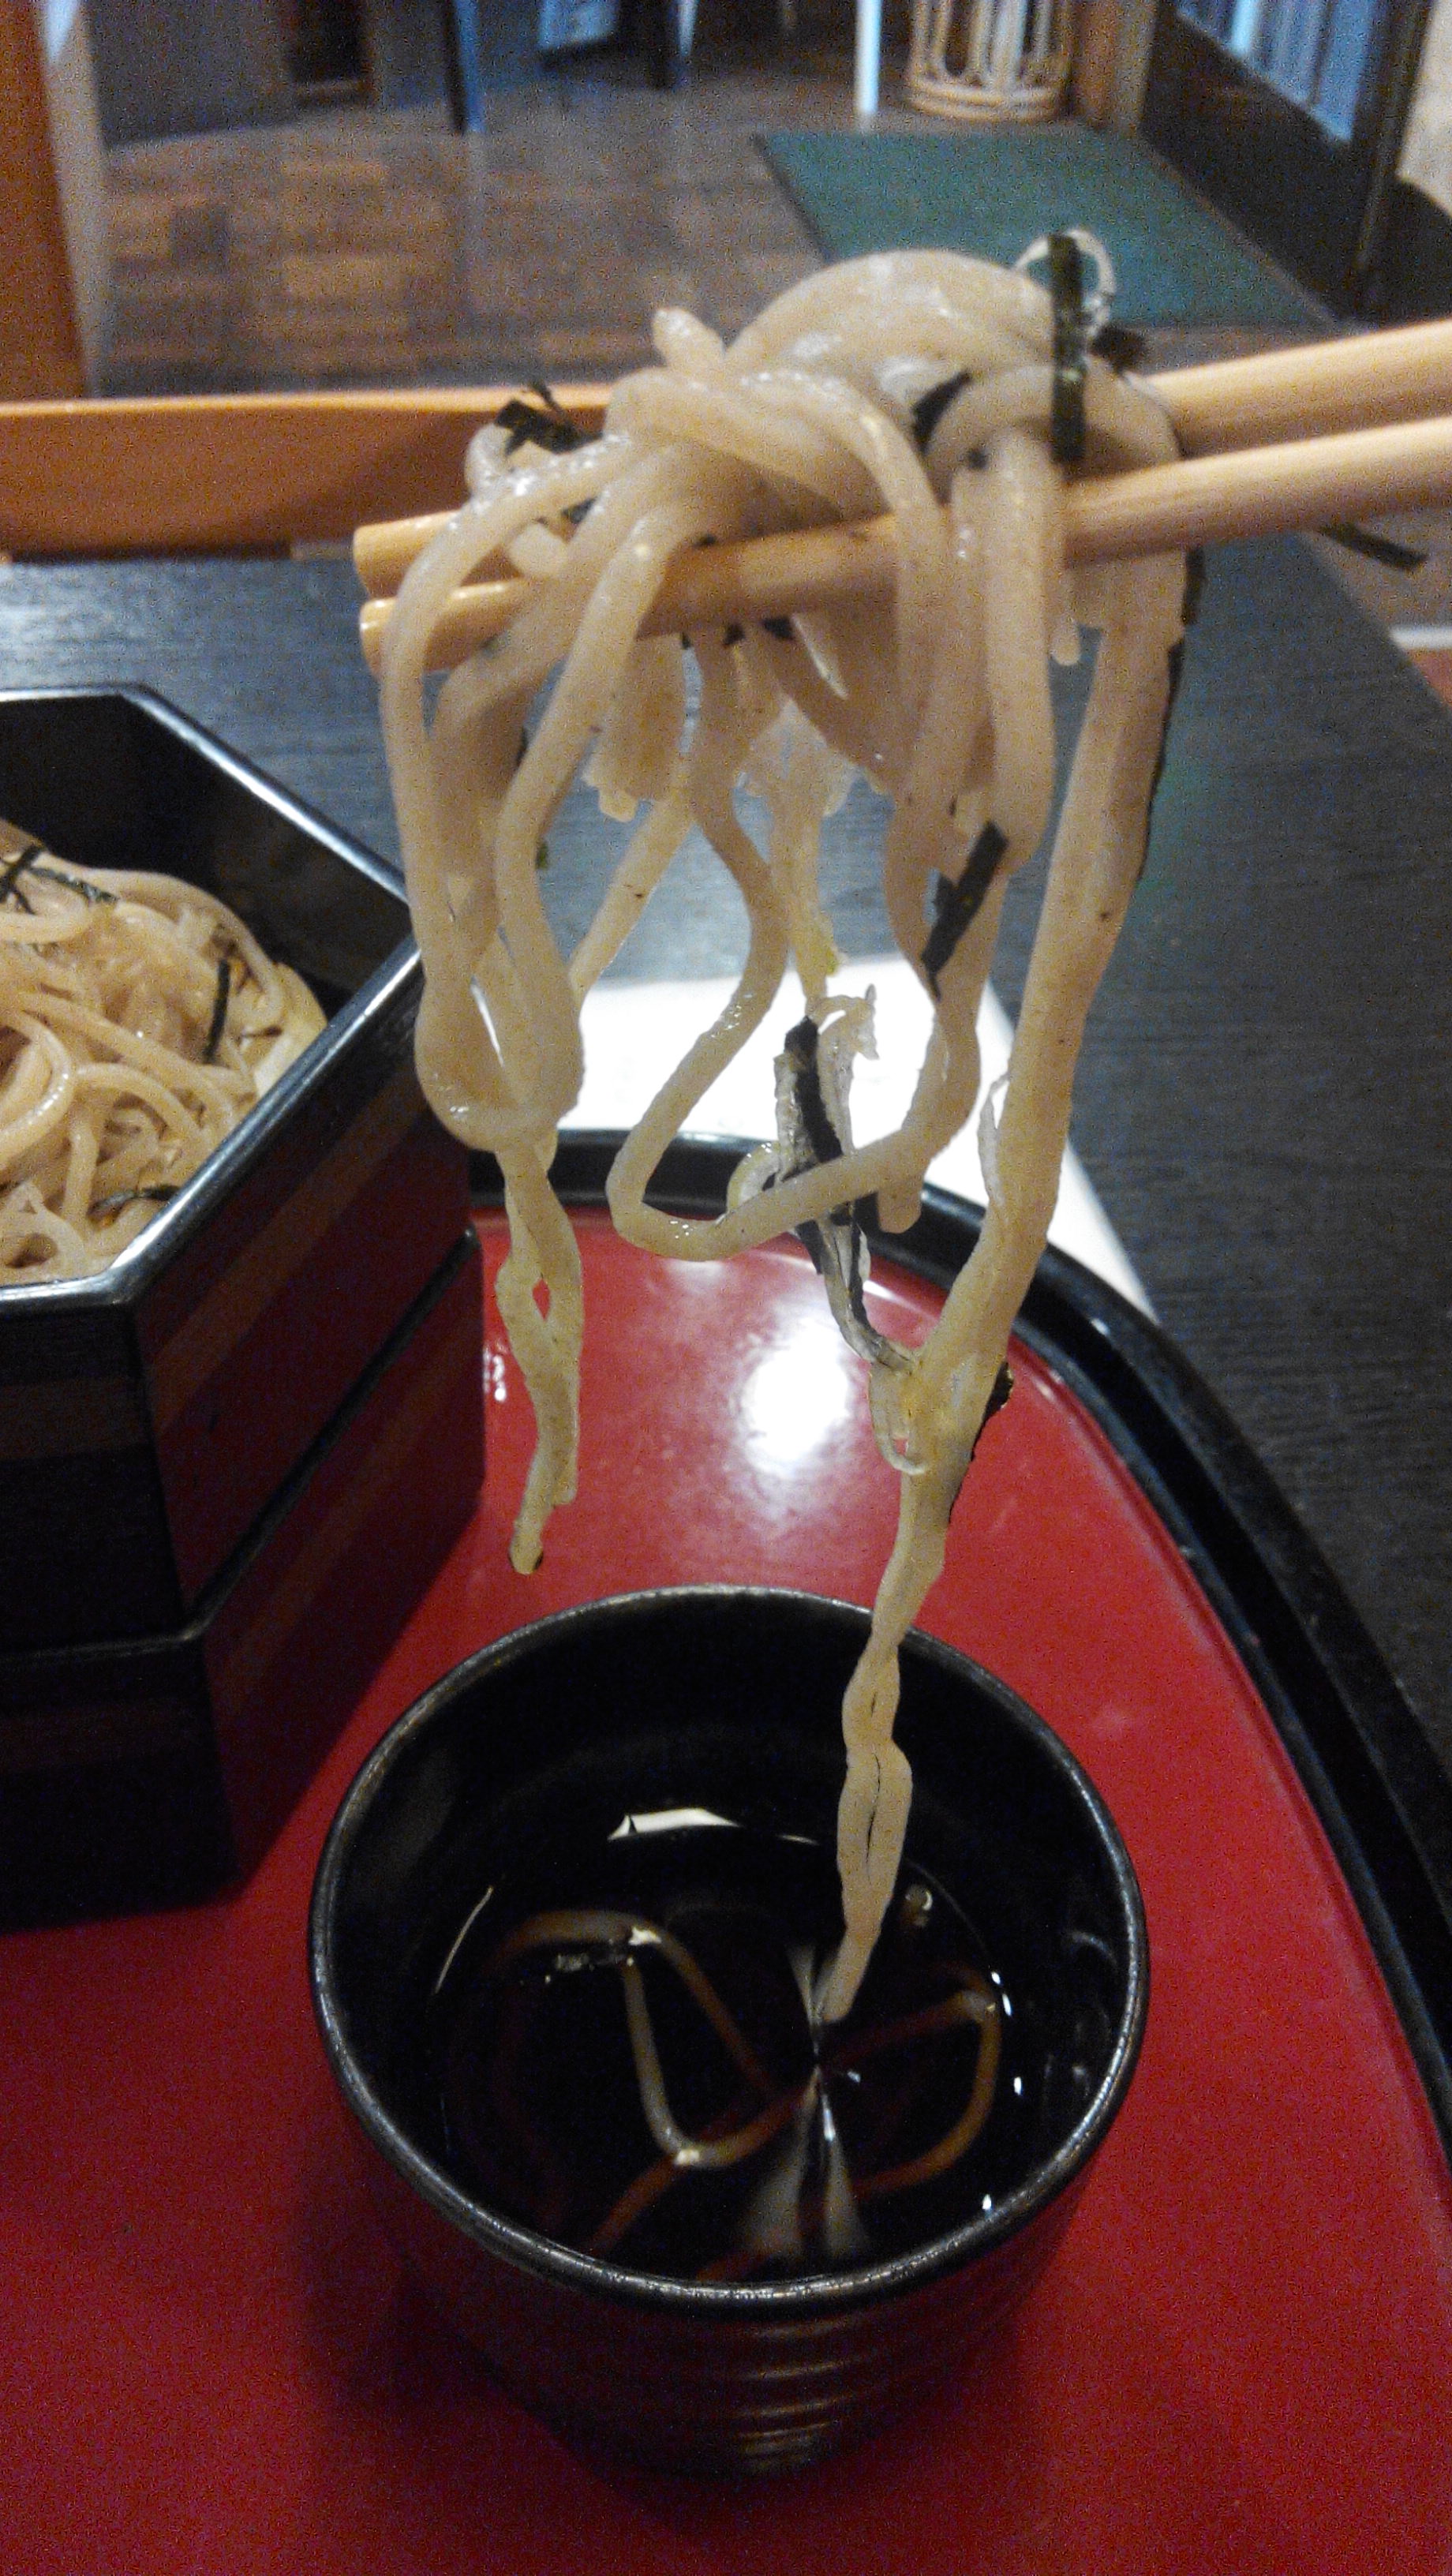 Soba vs Ramen: Comparing Japanese Noodle Dishes